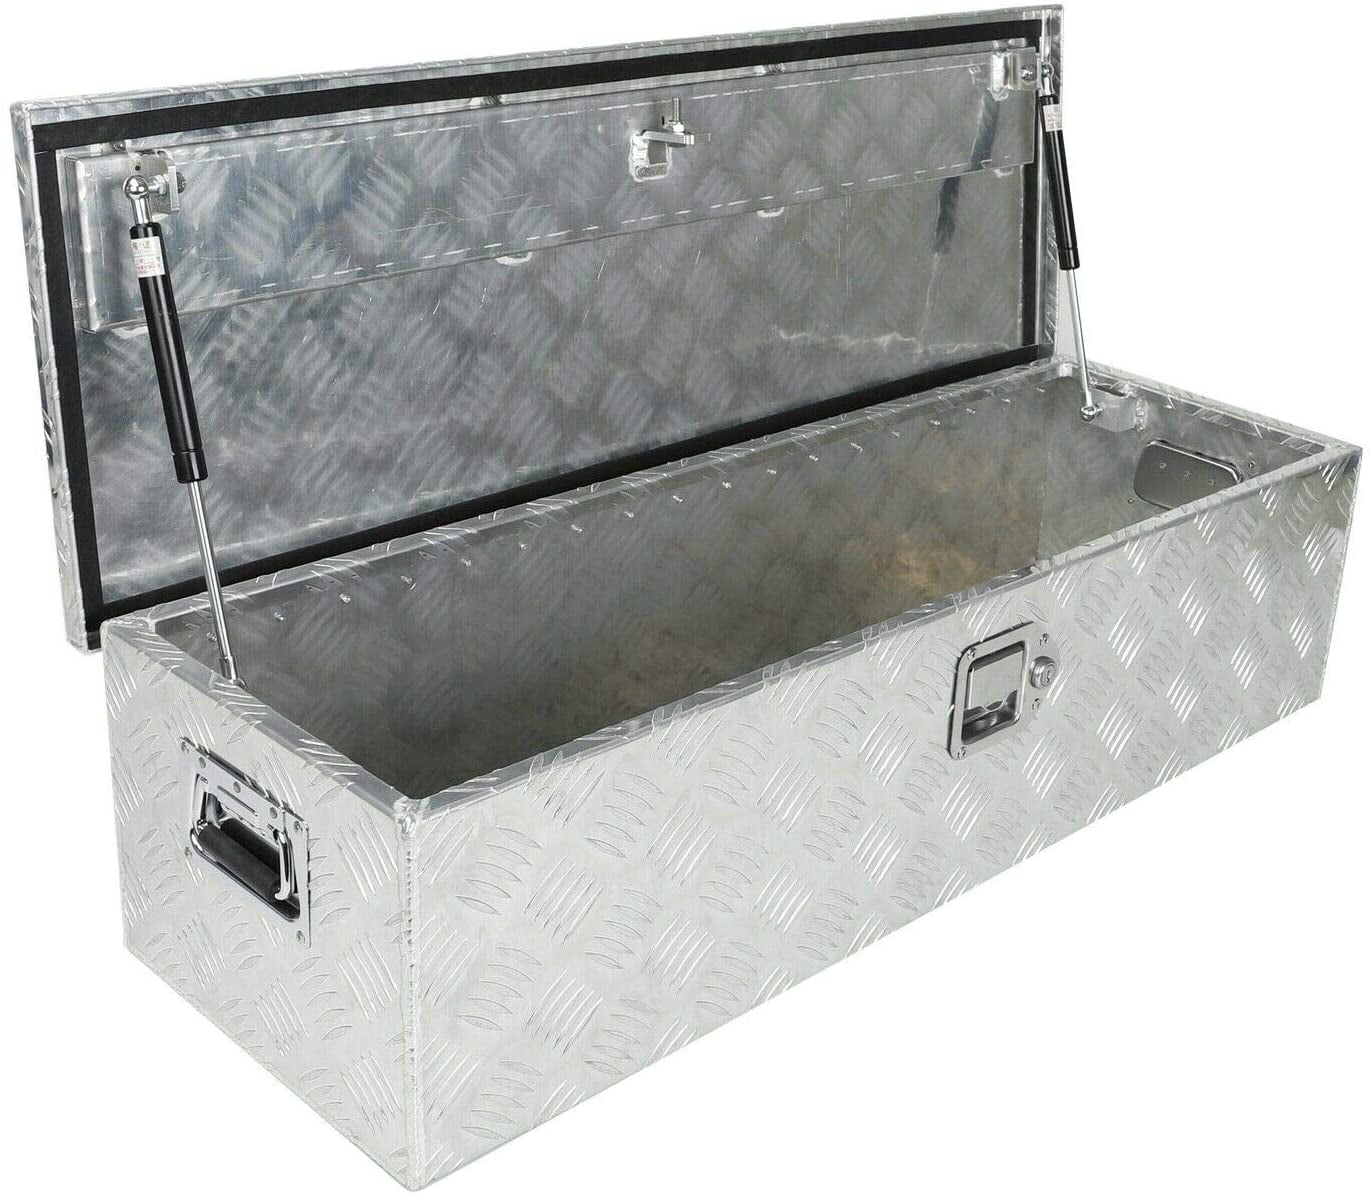 Details about   Aluminium tool box trailer under tray Ute Storage 42"× 19"×17" 